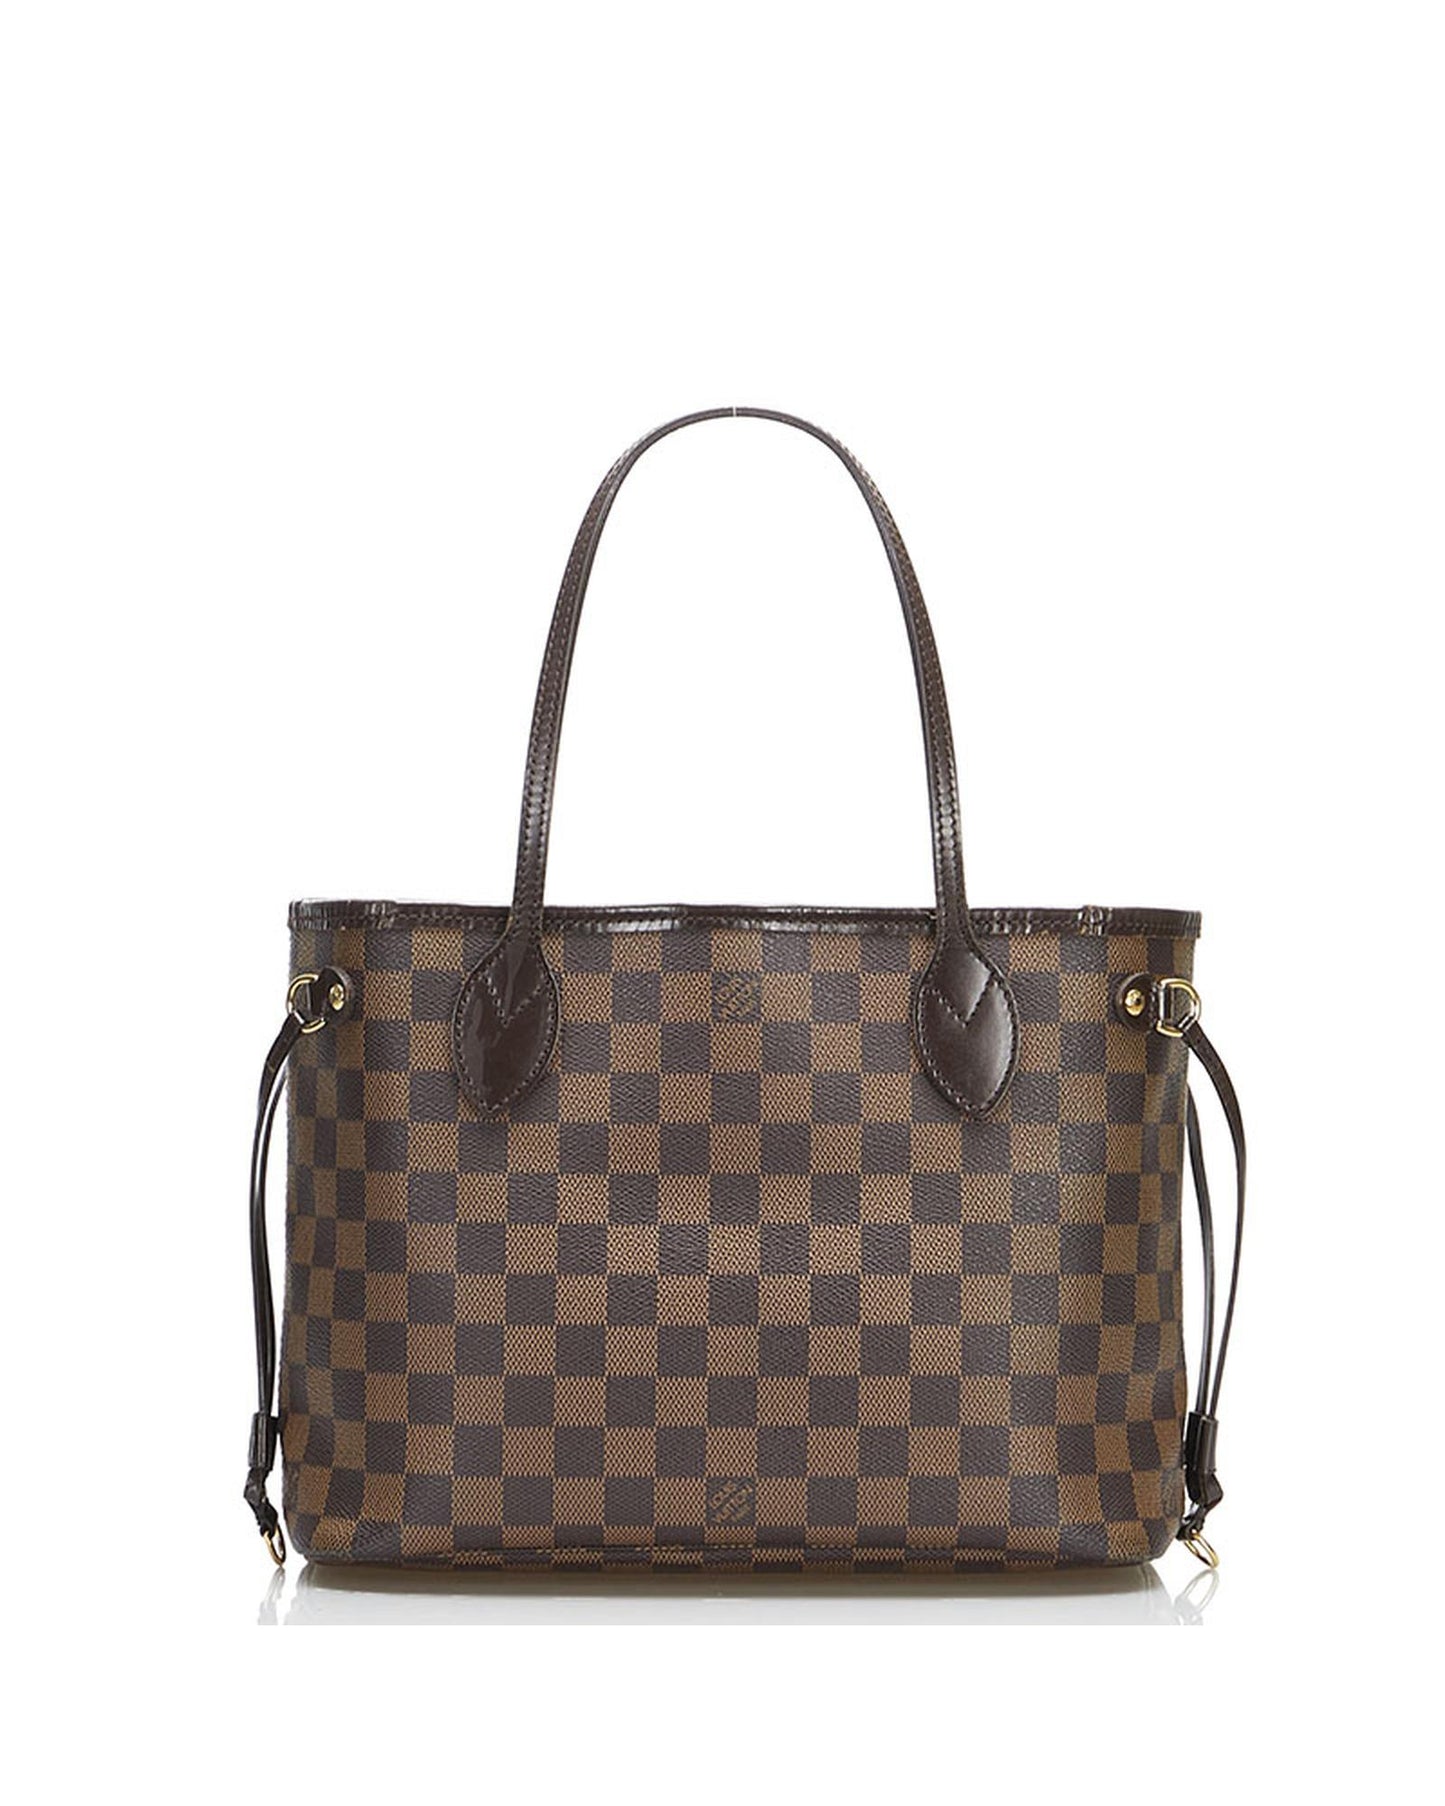 Louis Vuitton Women's Classic Damier Ebene Tote Bag in Brown